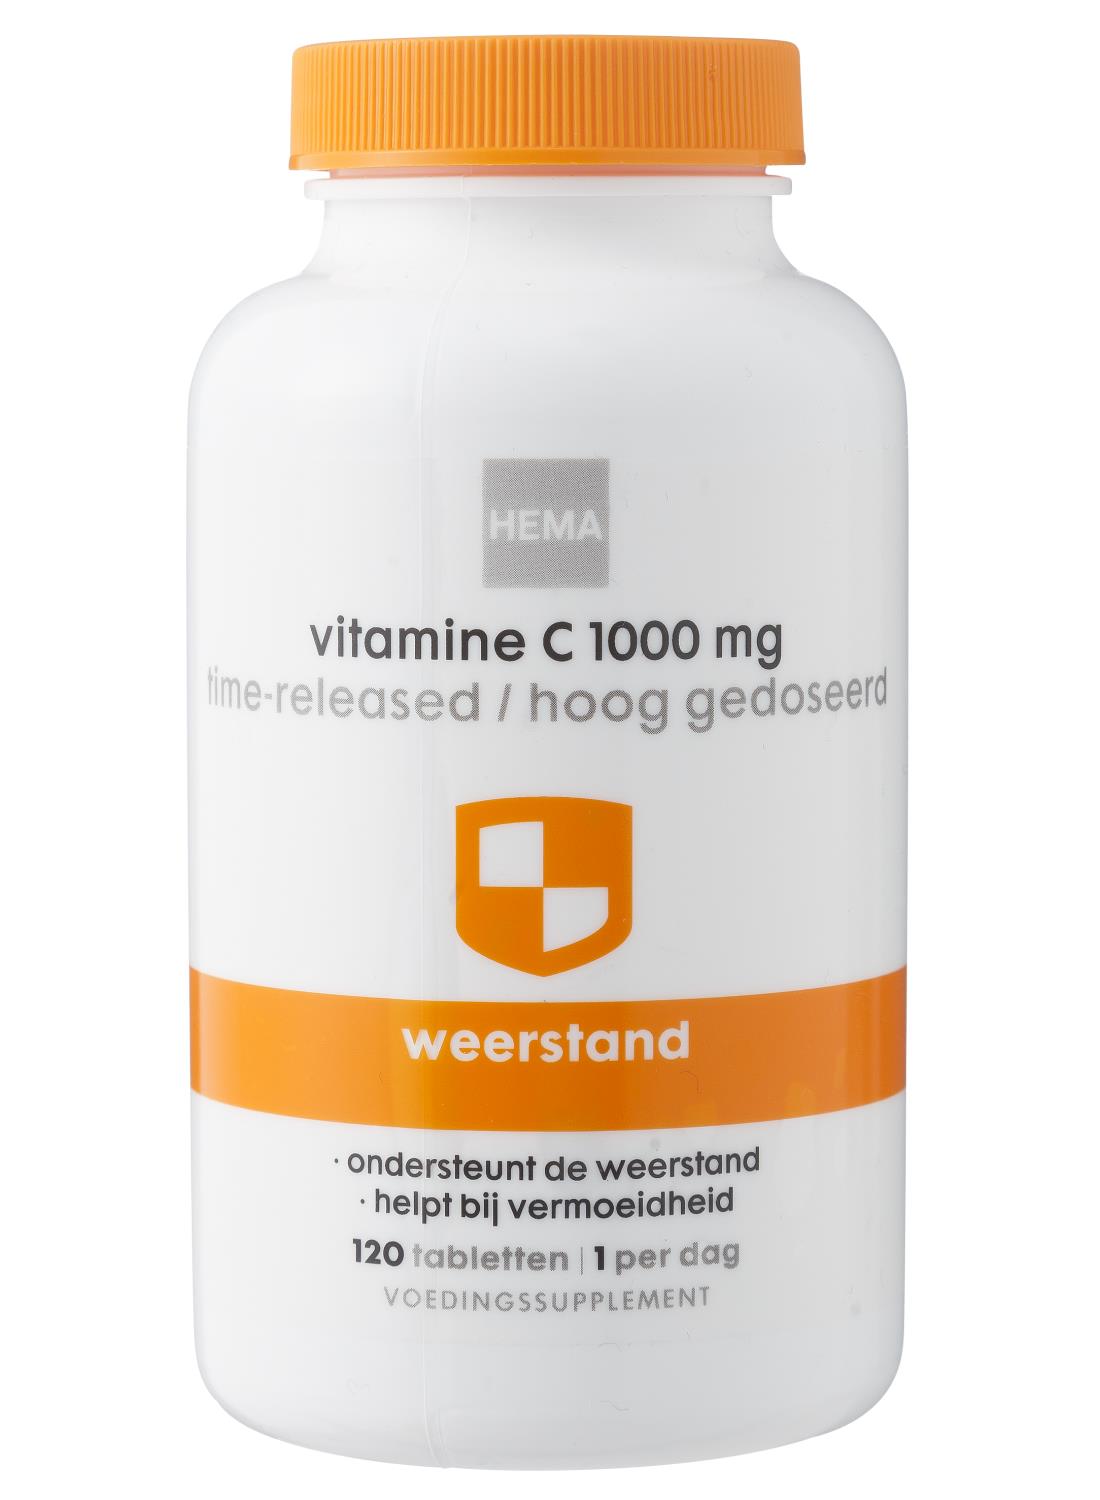 vitamine 1000 mg time-released - HEMA